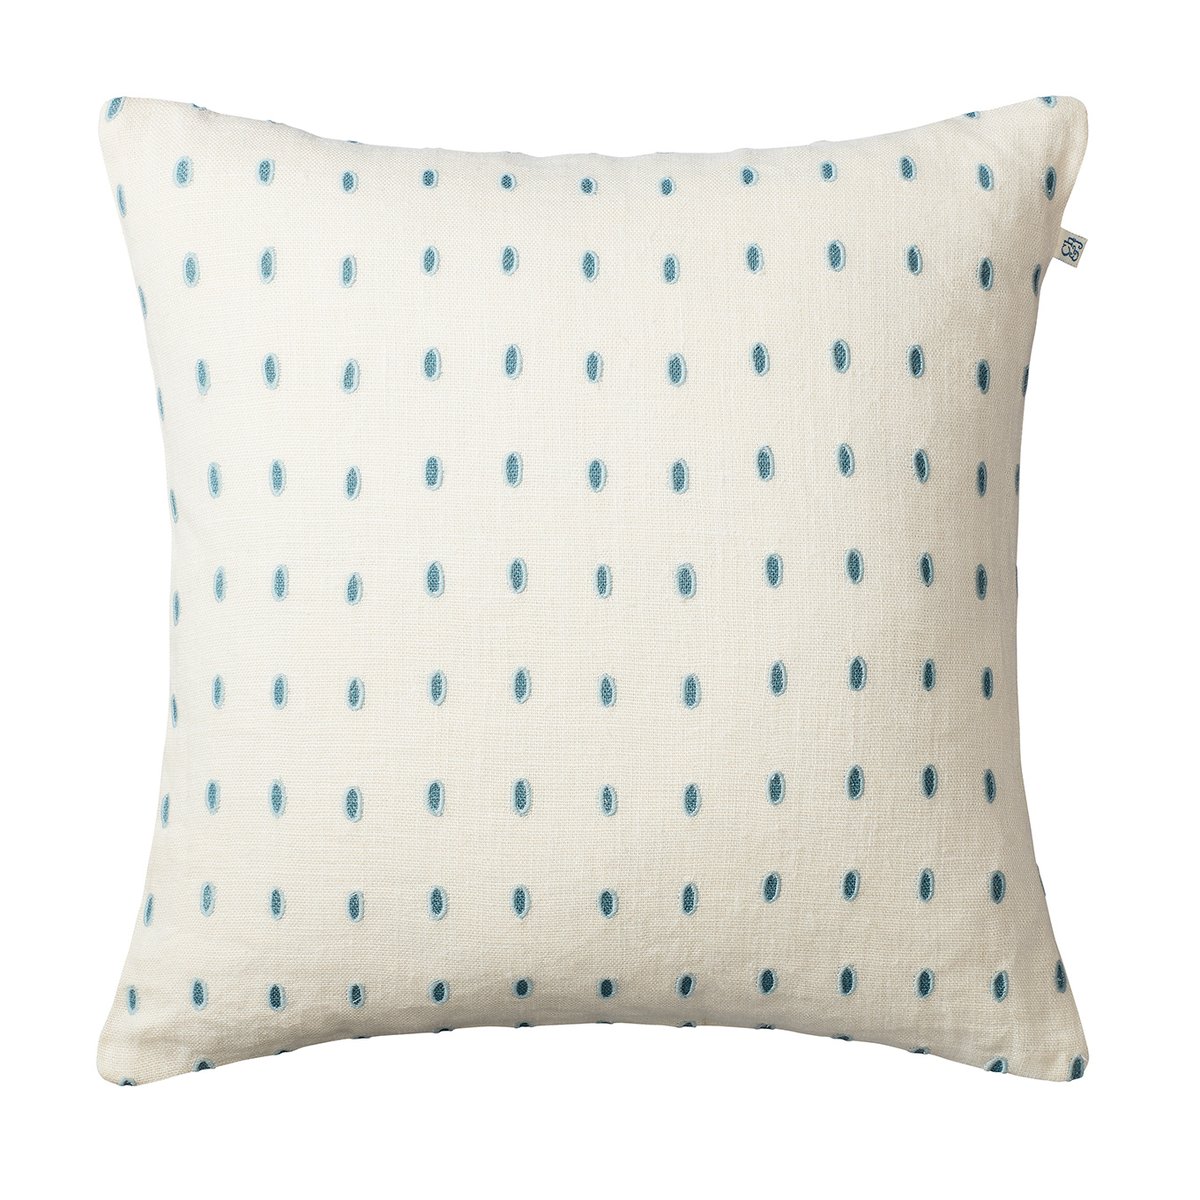 Drop tyynynpäällinen 50x50 cm White-blue-aqua